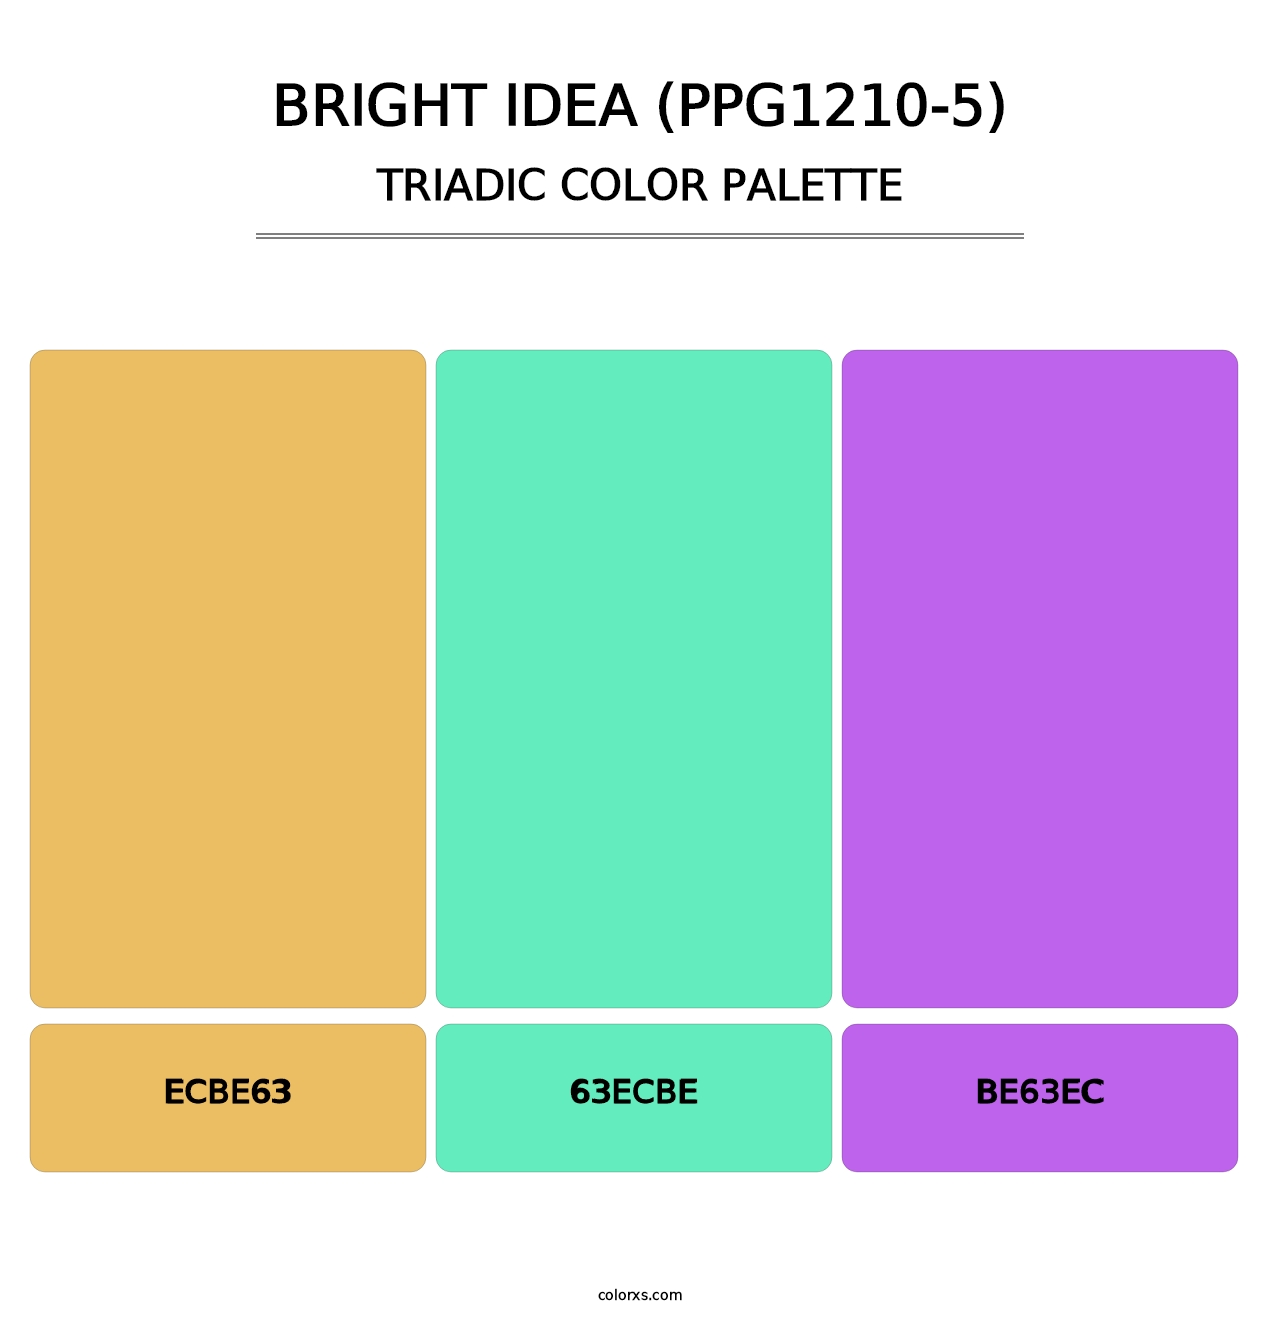 Bright Idea (PPG1210-5) - Triadic Color Palette